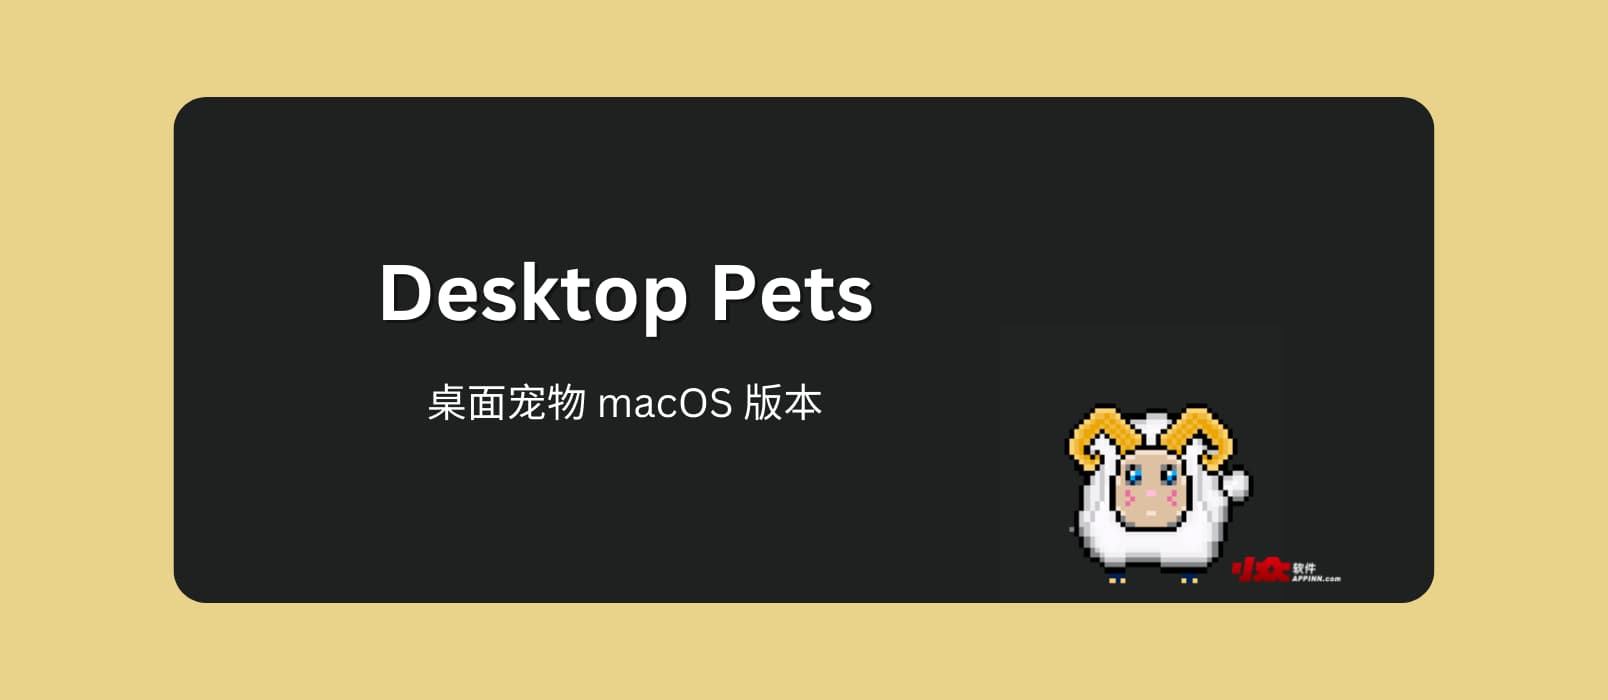 Desktop Pets – 那只羊，桌面宠物 macOS 版本